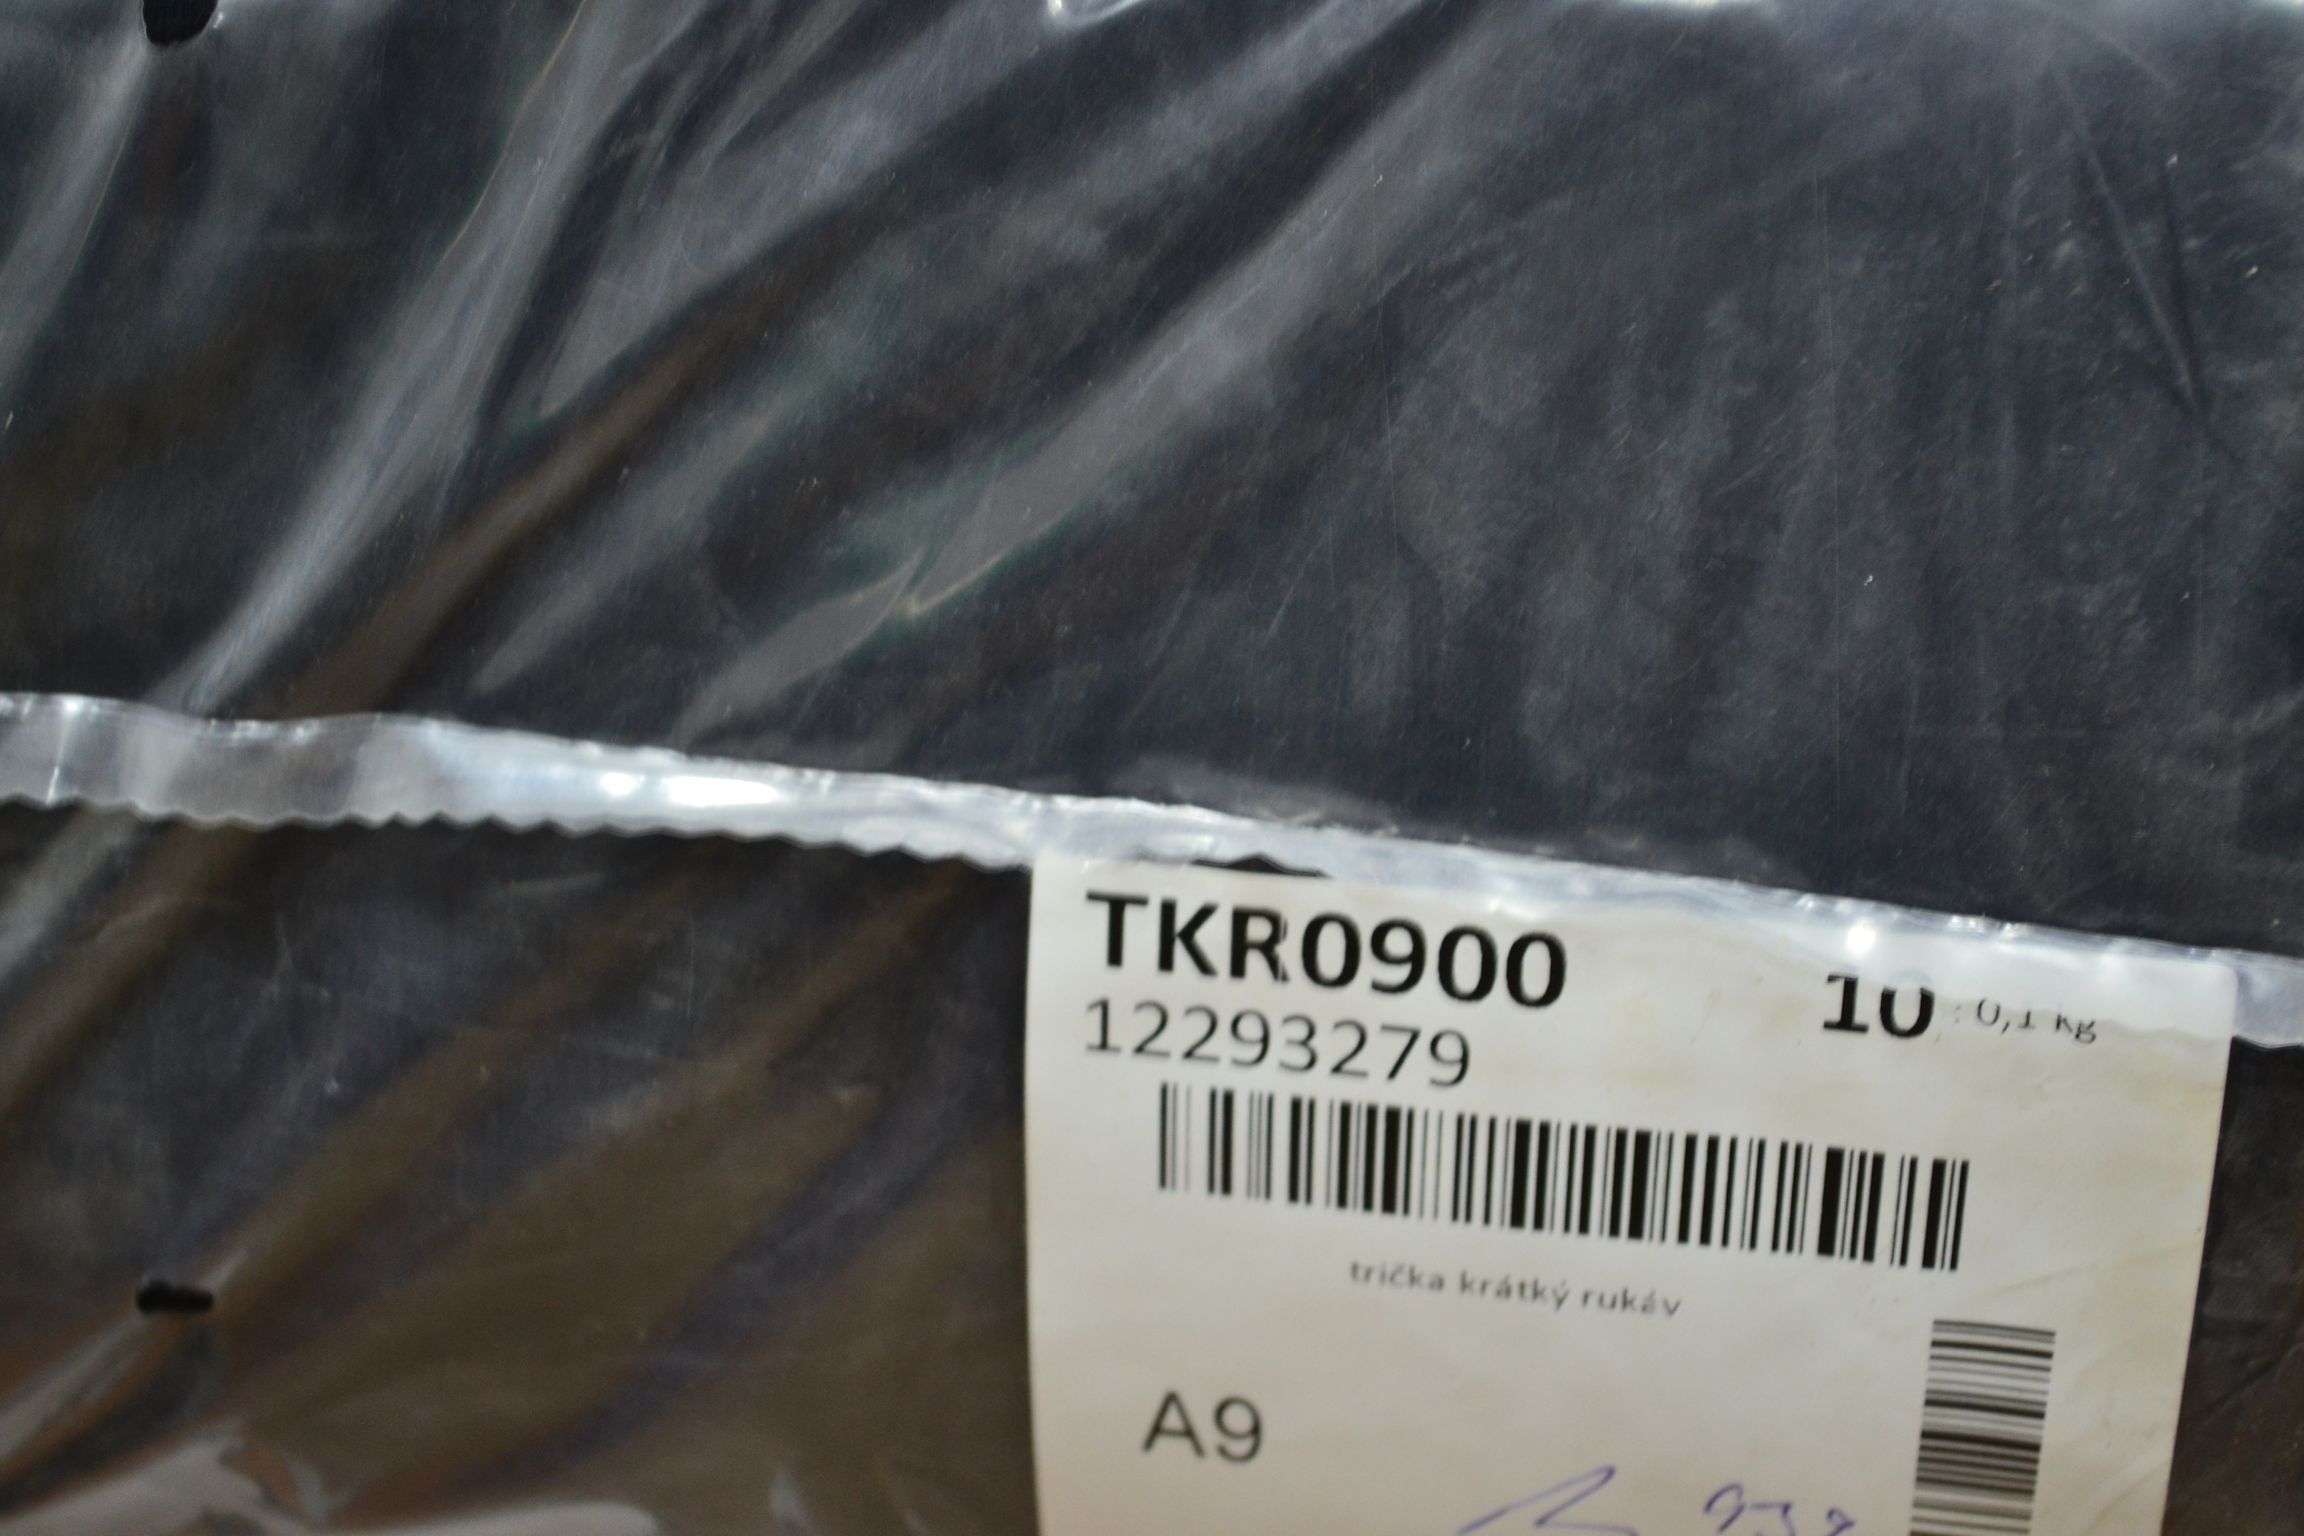 TKR0900 Майки с коротким рукавом; код мешка 12293279